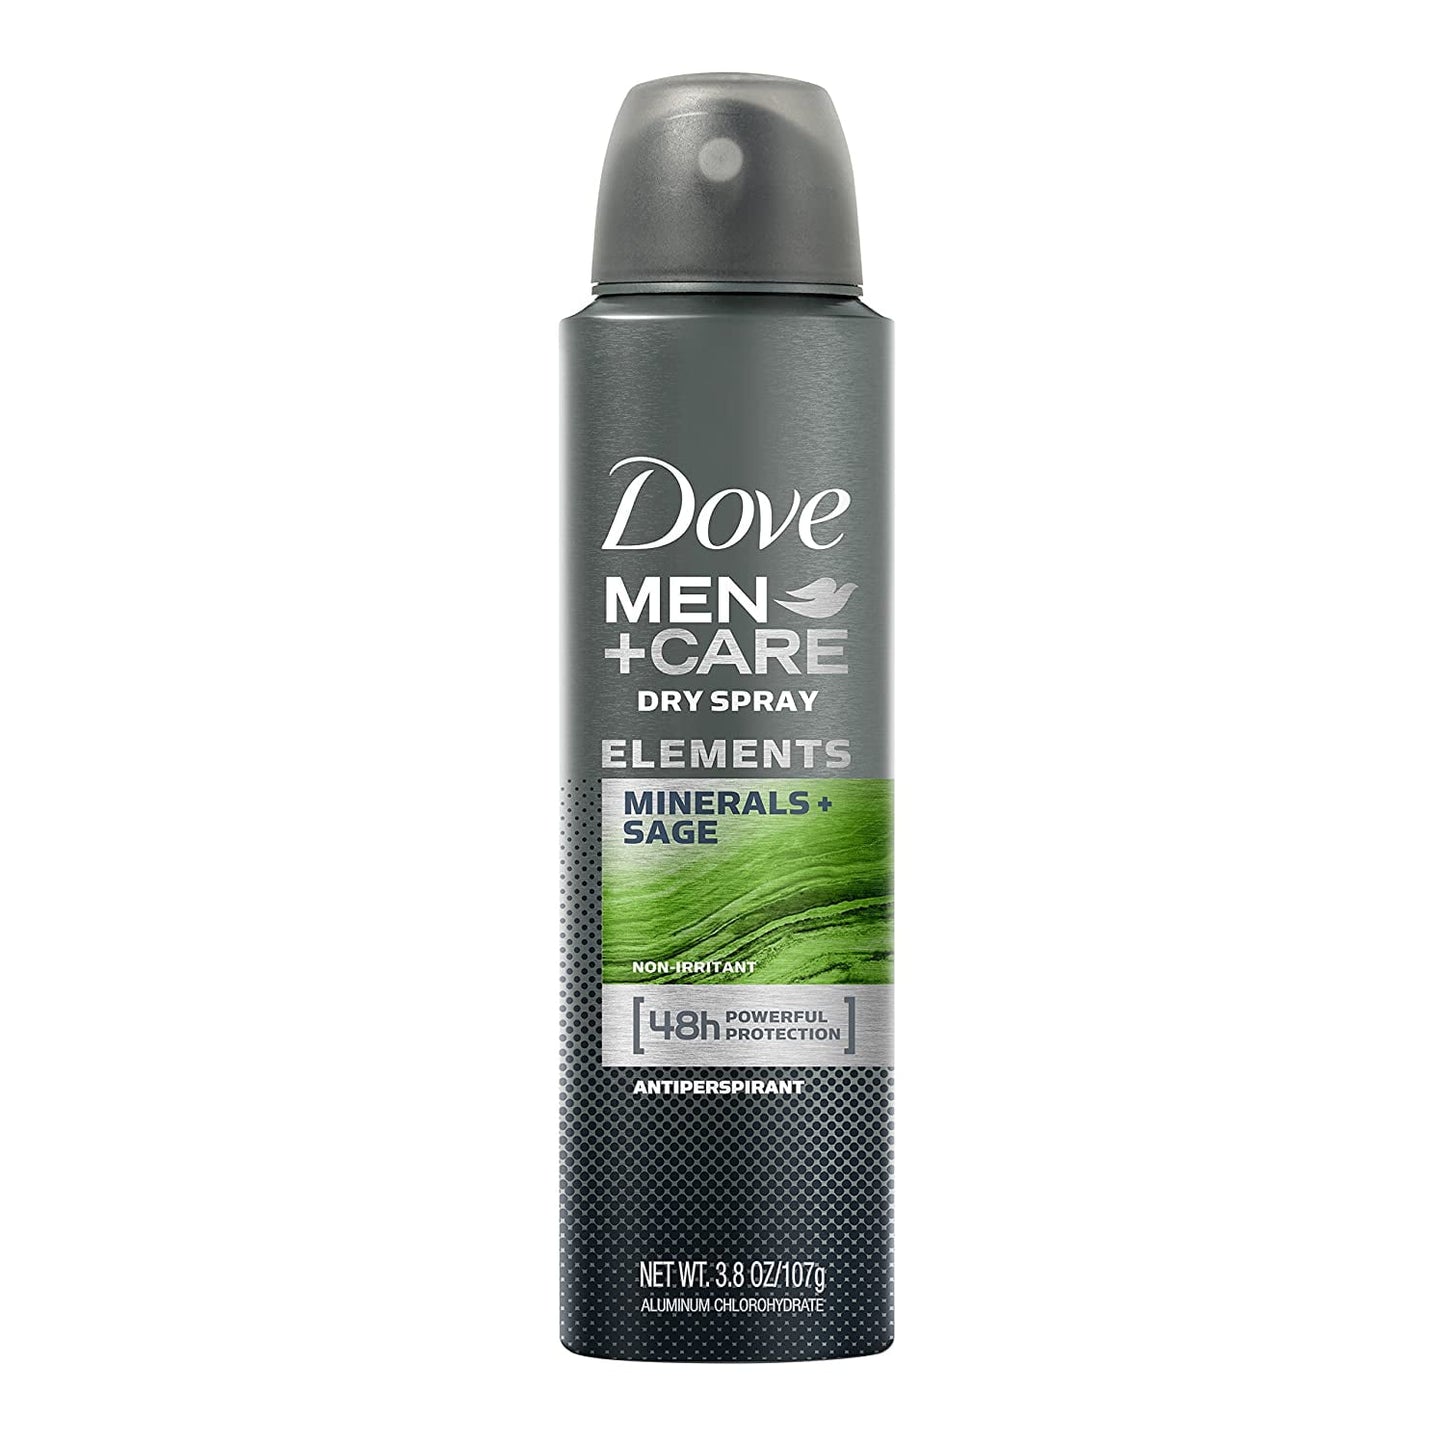 Dove Men+Care Elements Antiperspirant Dry Spray, Minerals + Sage, 3.8oz |1 Pc per Pack